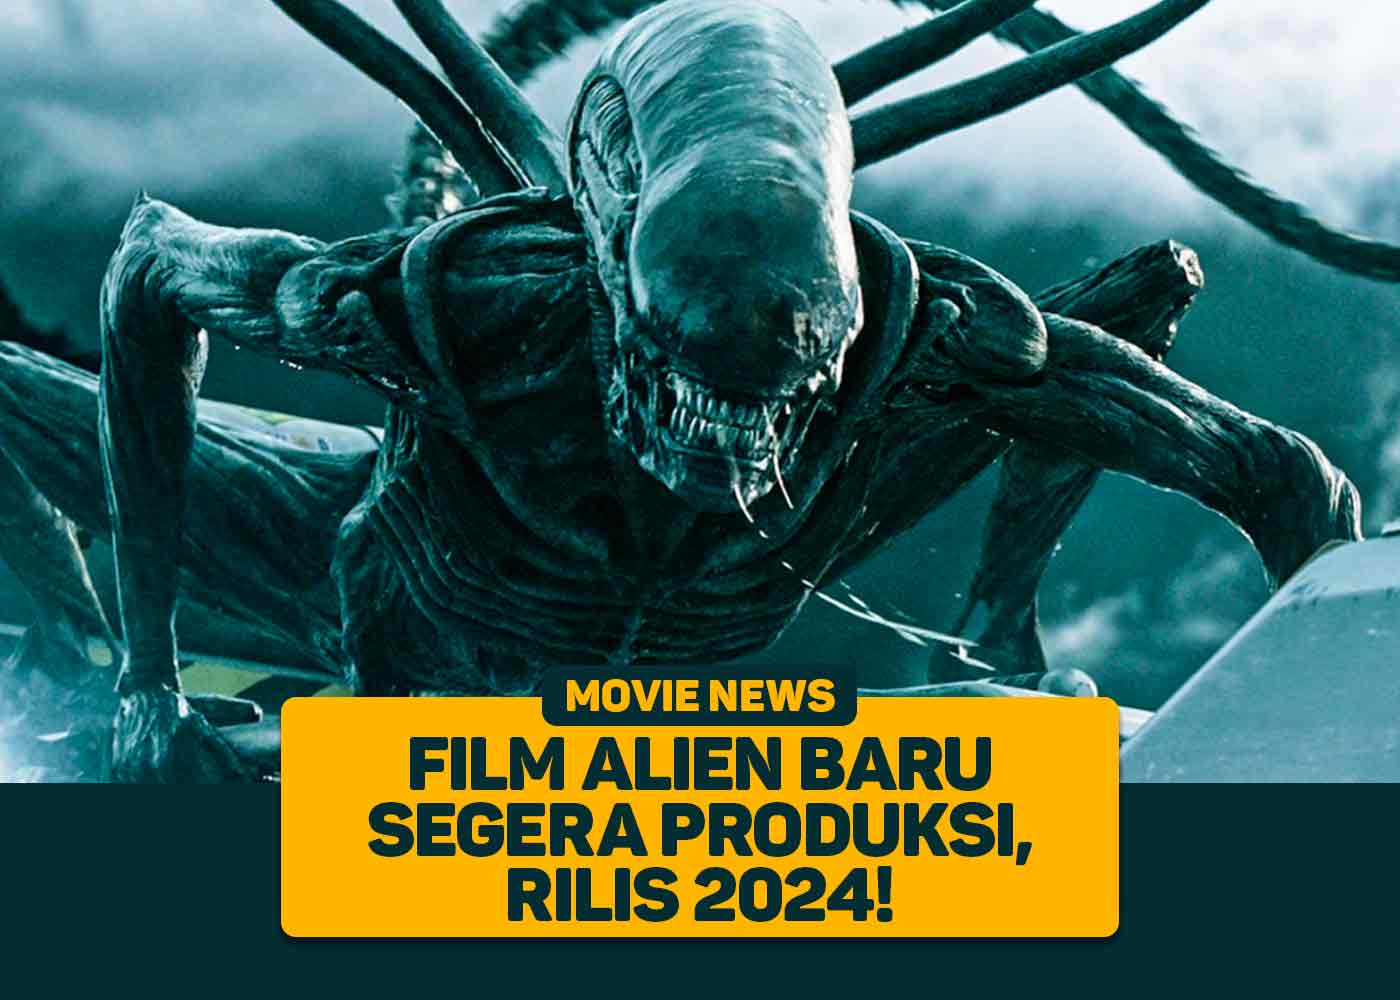 Film Alien Baru Segera Produksi, Rilis 2024!